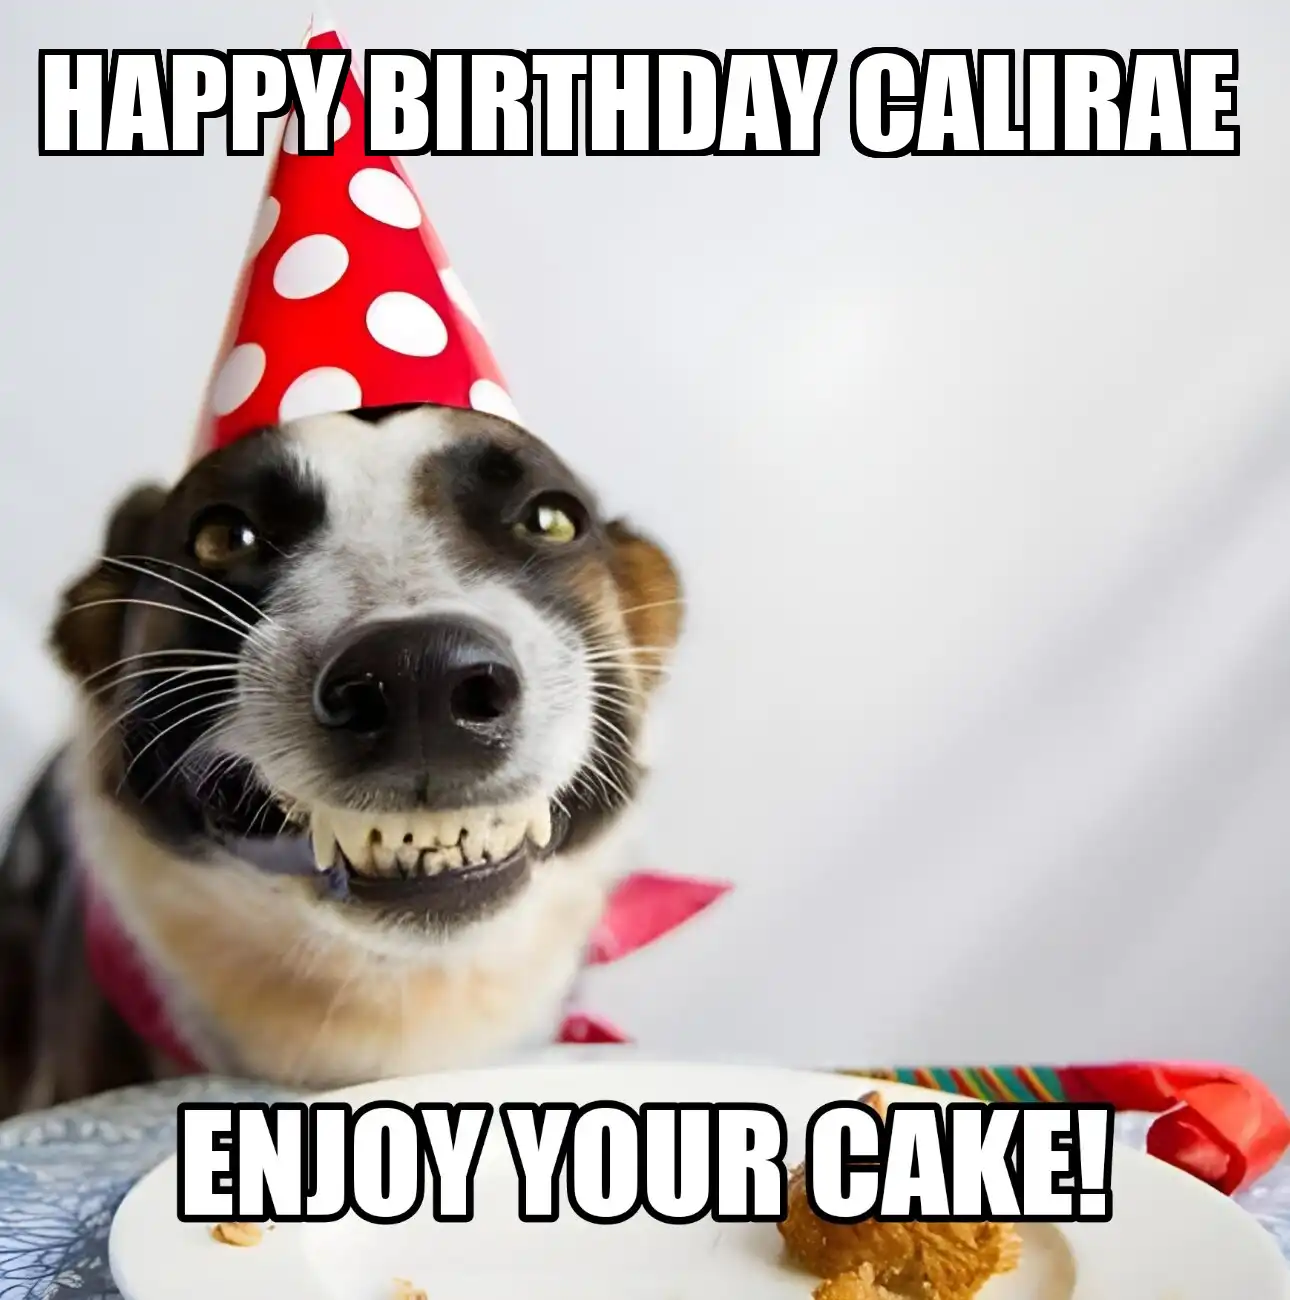 Happy Birthday Calirae Enjoy Your Cake Dog Meme